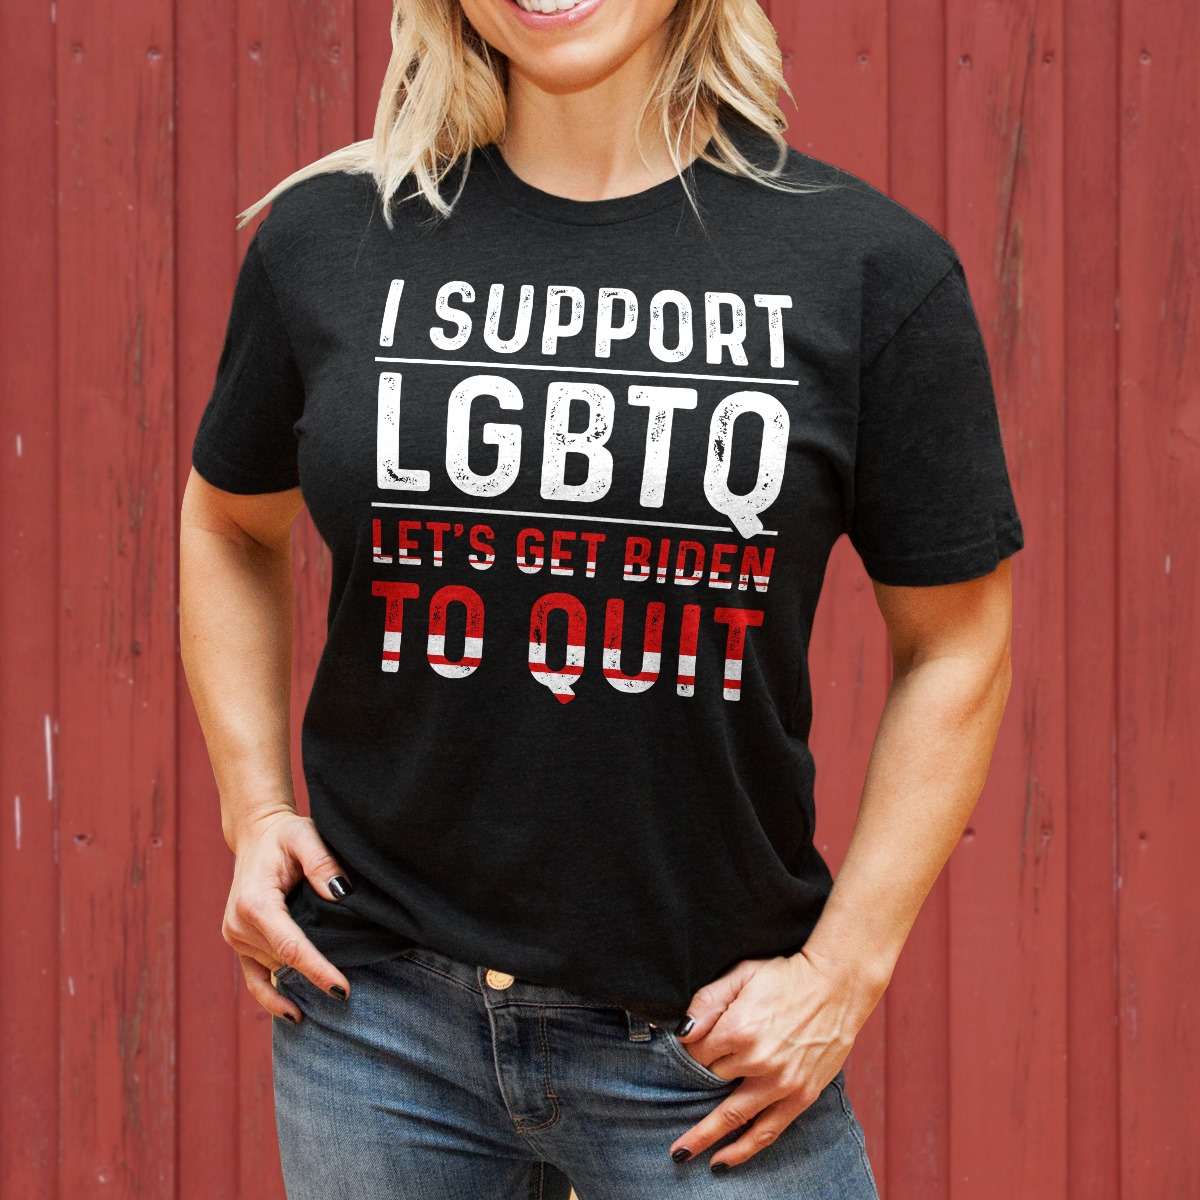 I support LGBTQ let's get Biden to quit - LGBT community, Joe Biden quit